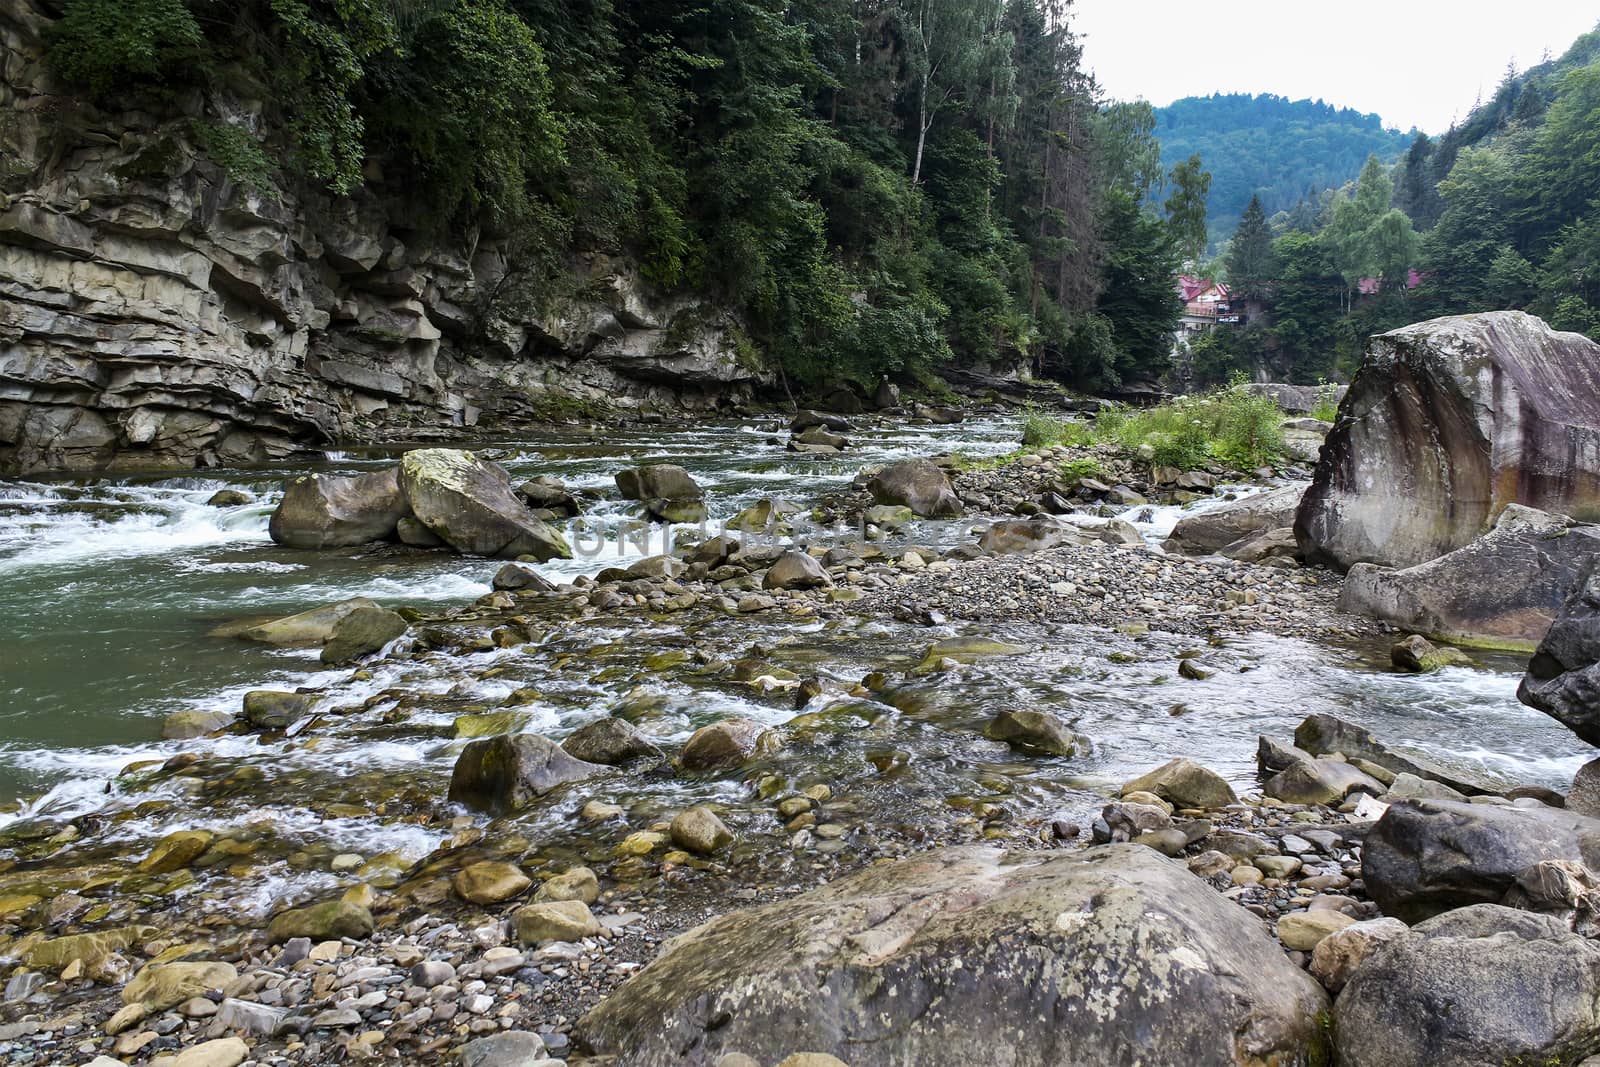 Carpathian Mountain stream in a green forest